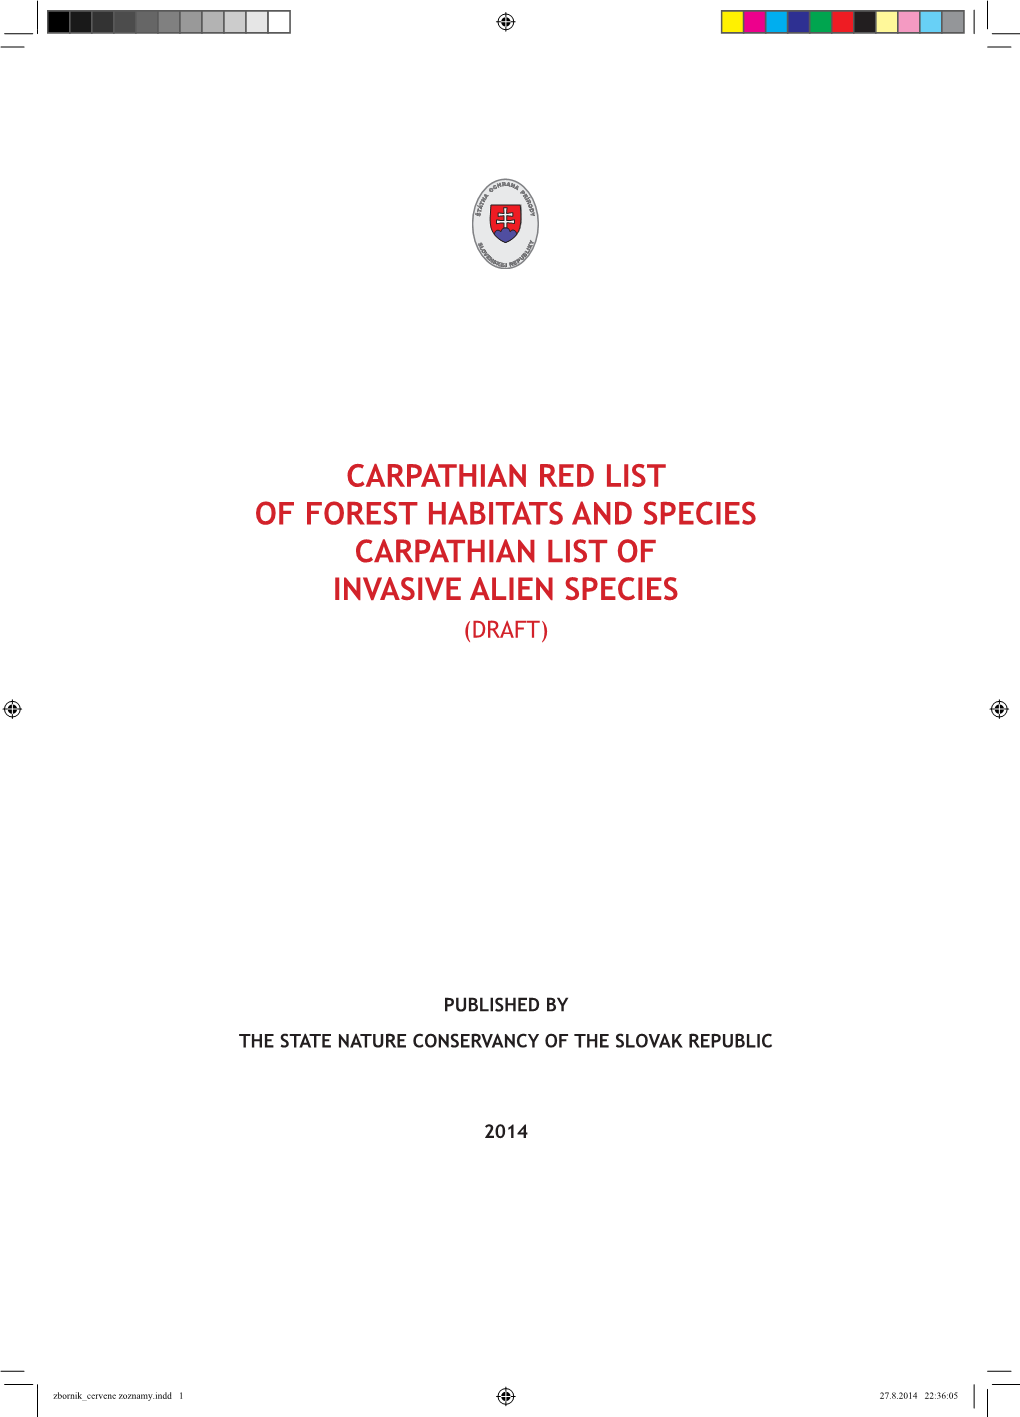 Draft Carpathian Red List of Forest Habitats